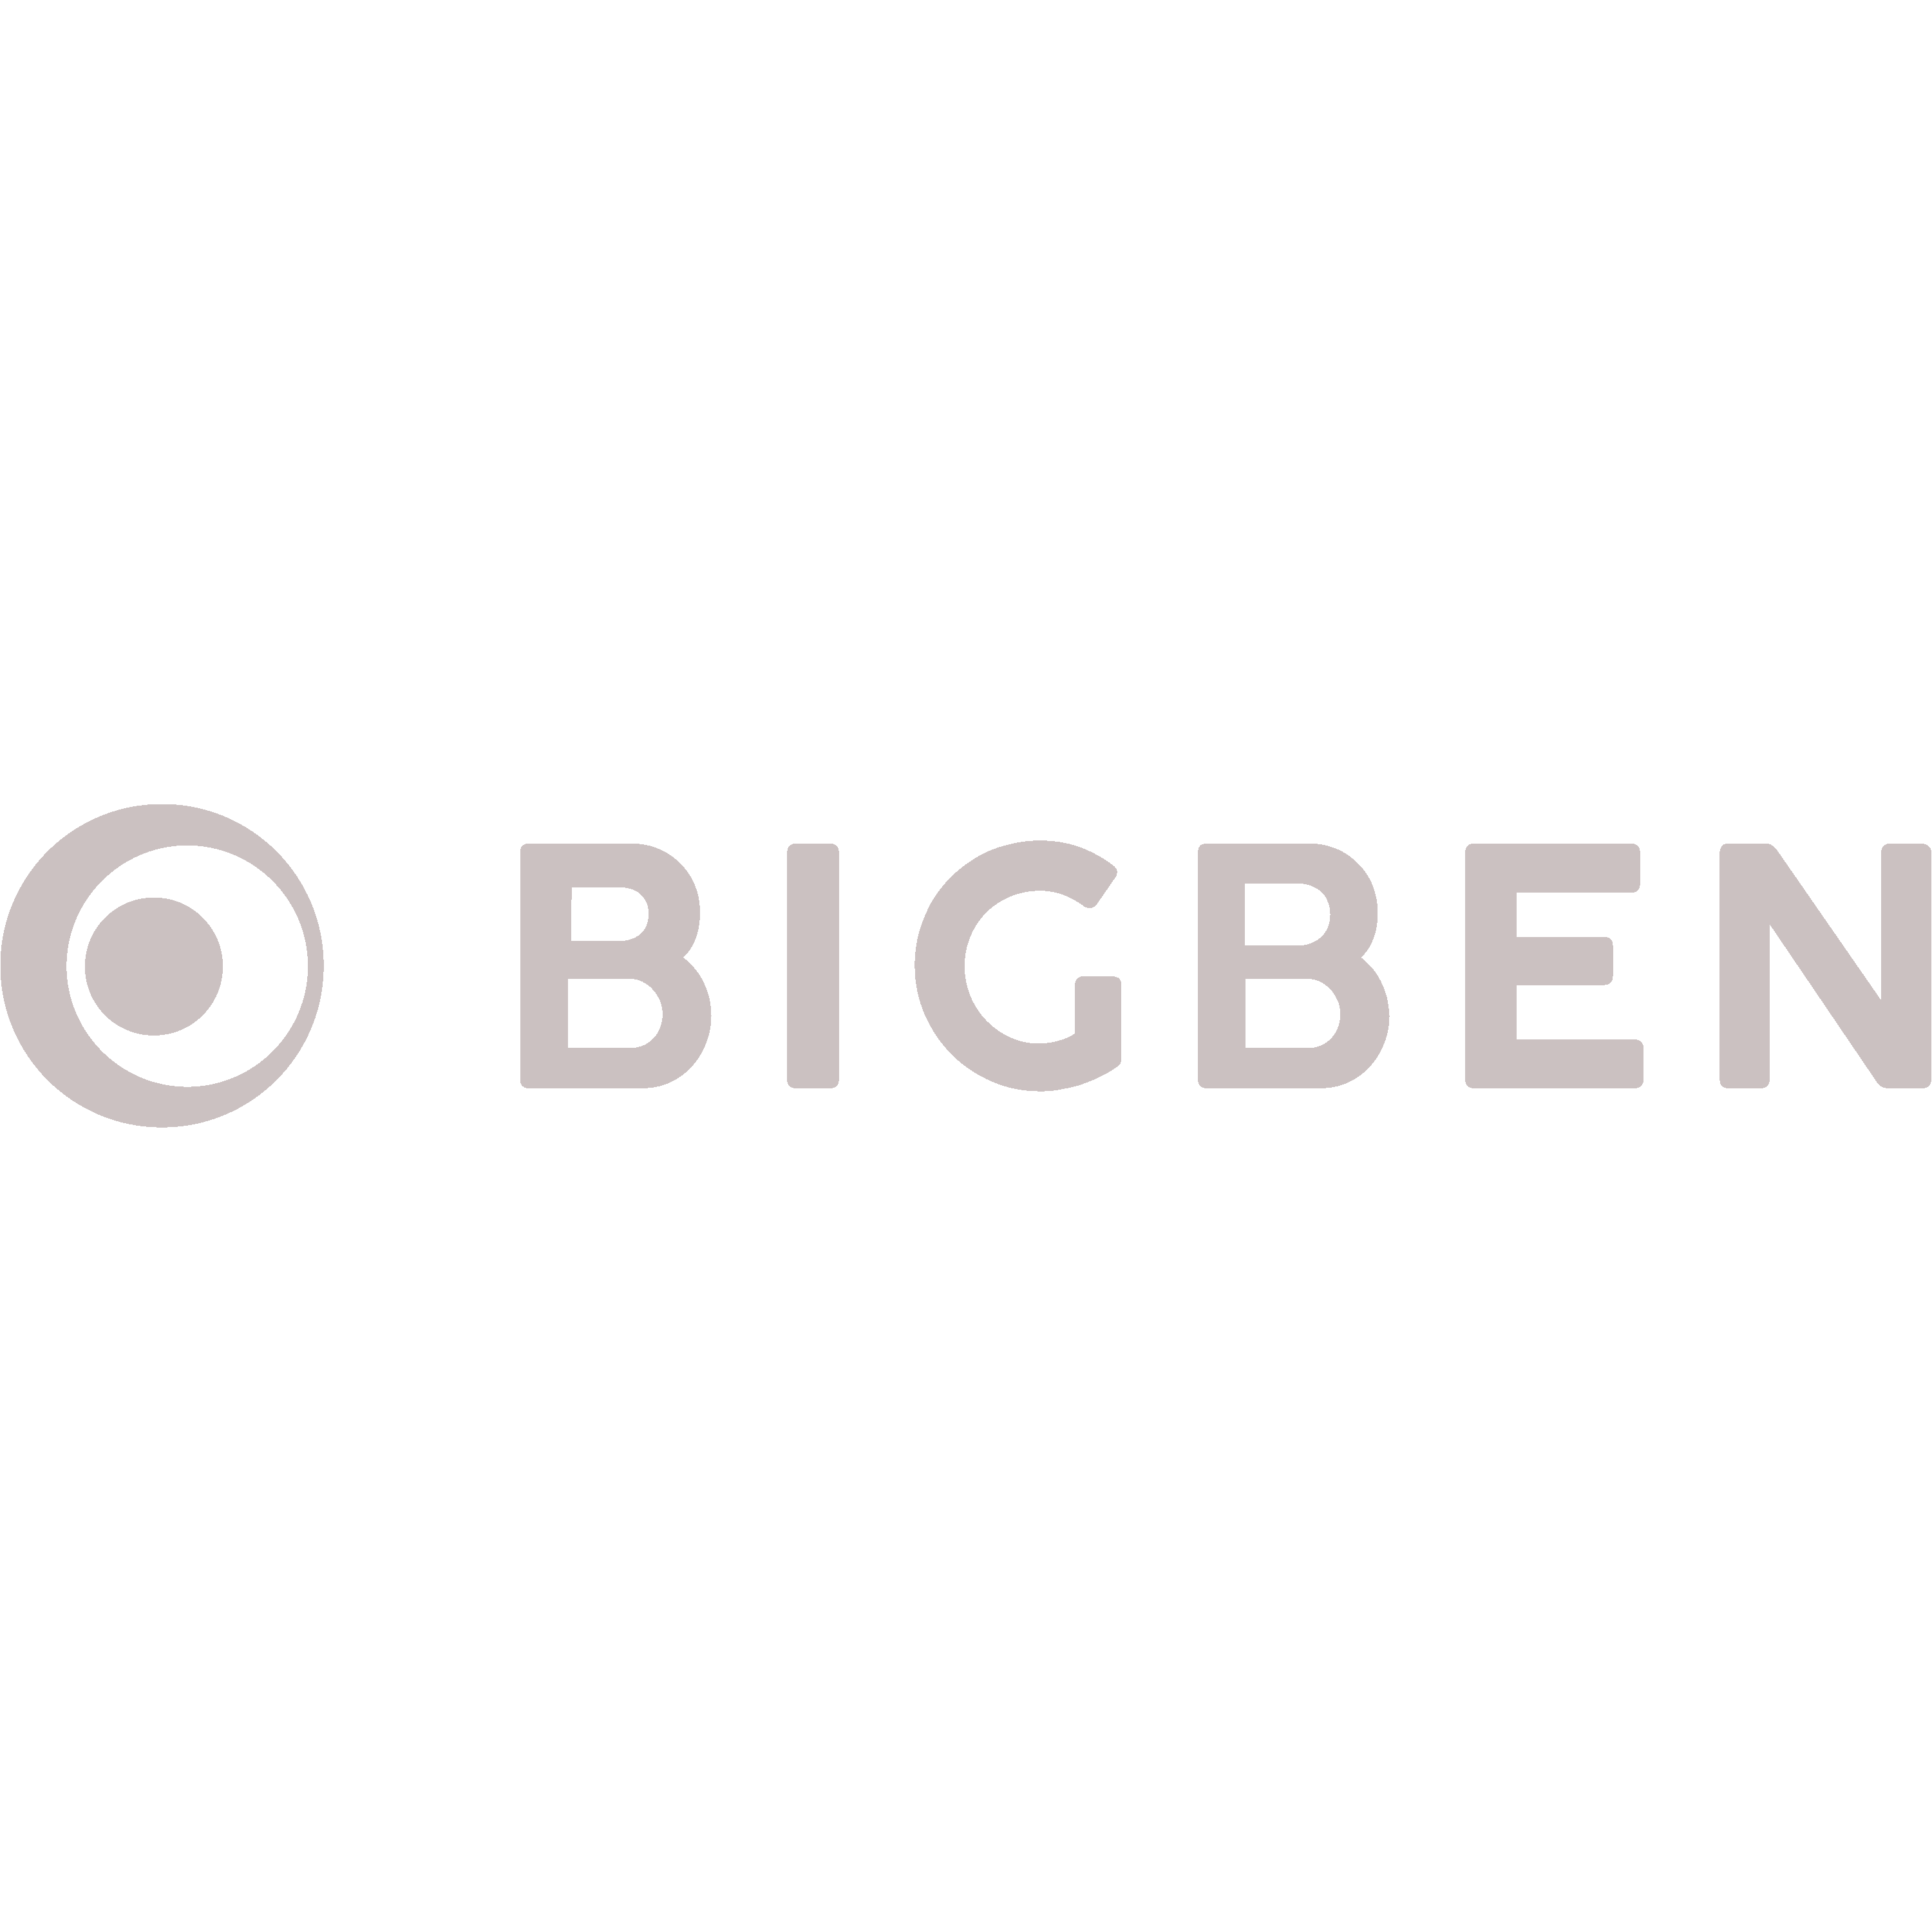 Bigben Logo Transparent Picture